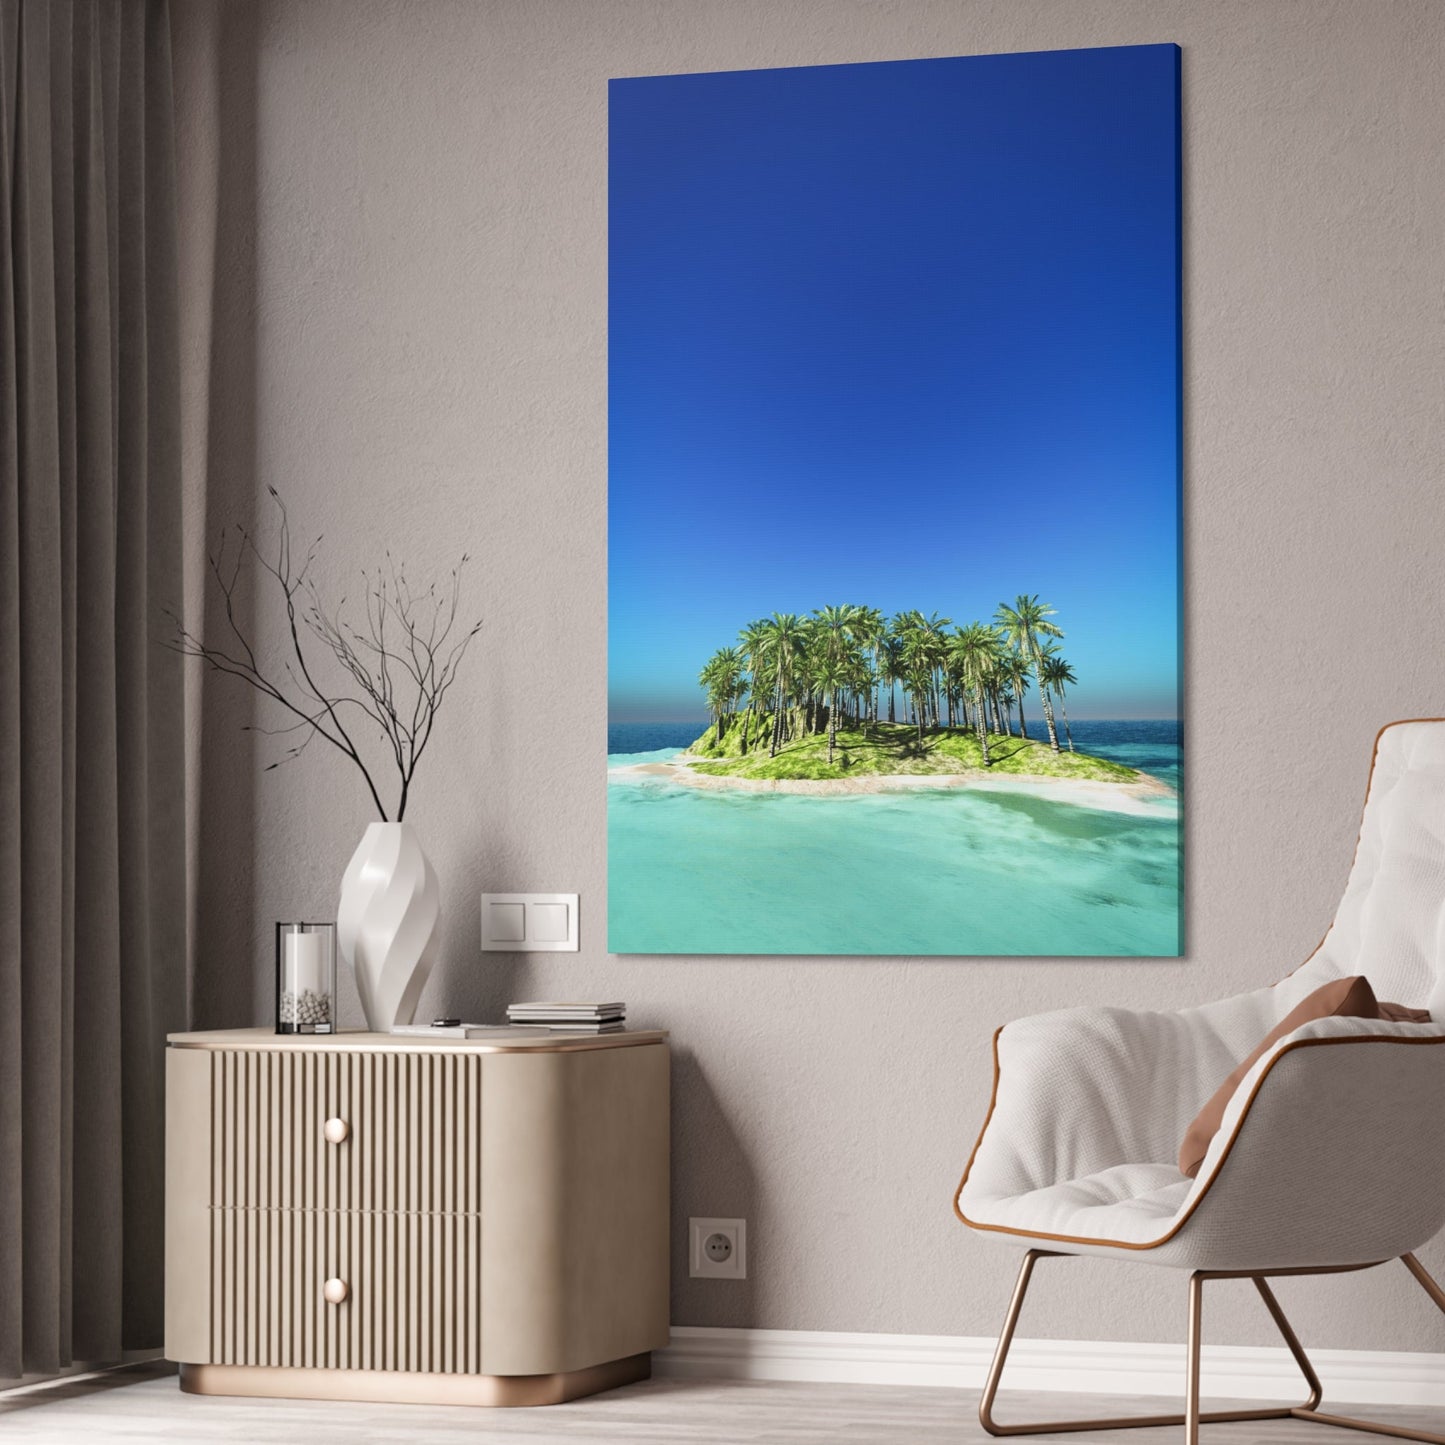 Coastal Charm: Print on Canvas of a Beautiful Beach on an Island